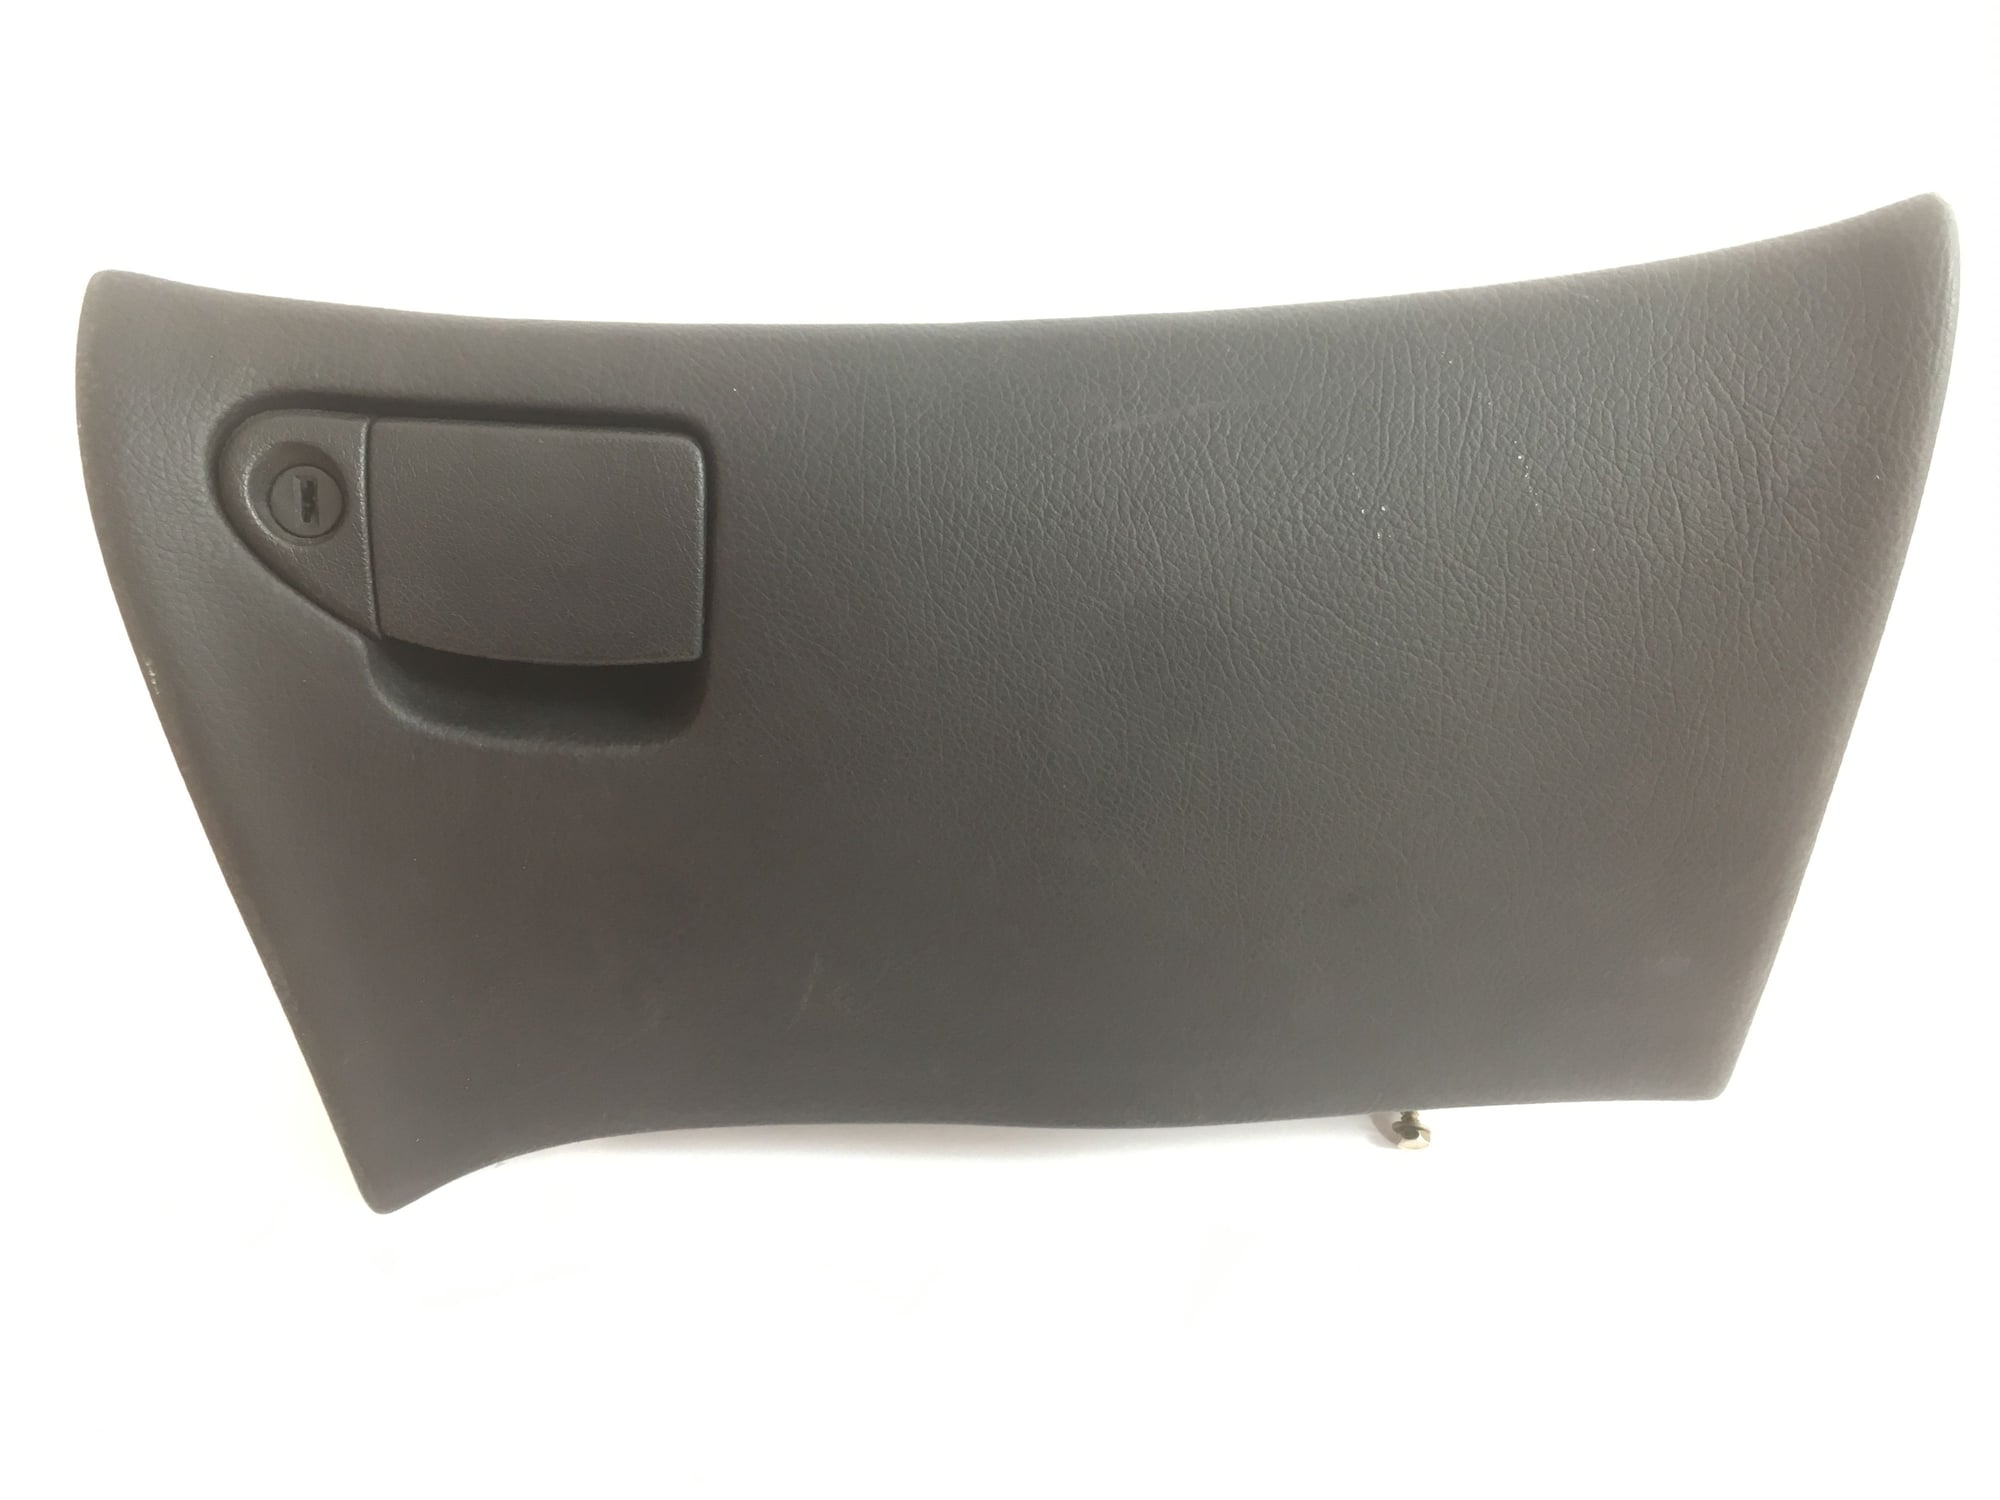 Interior/Upholstery - 1993 LHD Glove Box - Used - 1993 Mazda RX-7 - Croatia